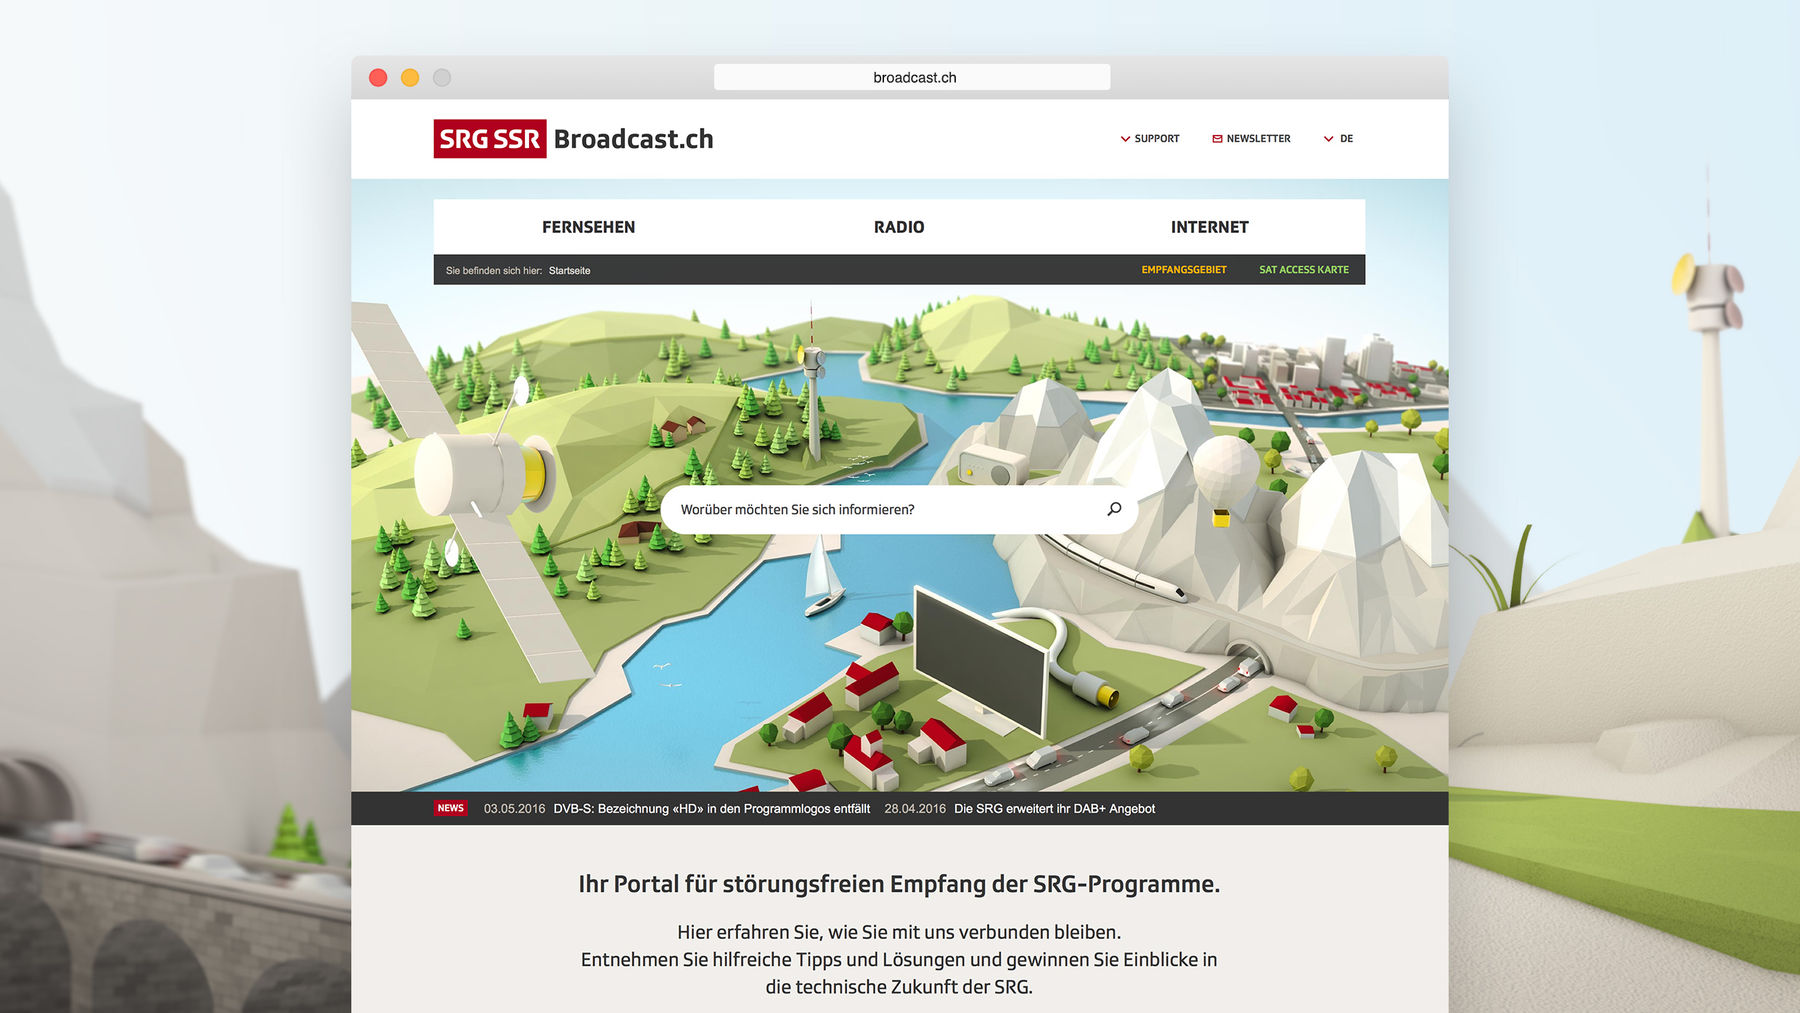 SRG SSR Broadcast.ch Webdesign